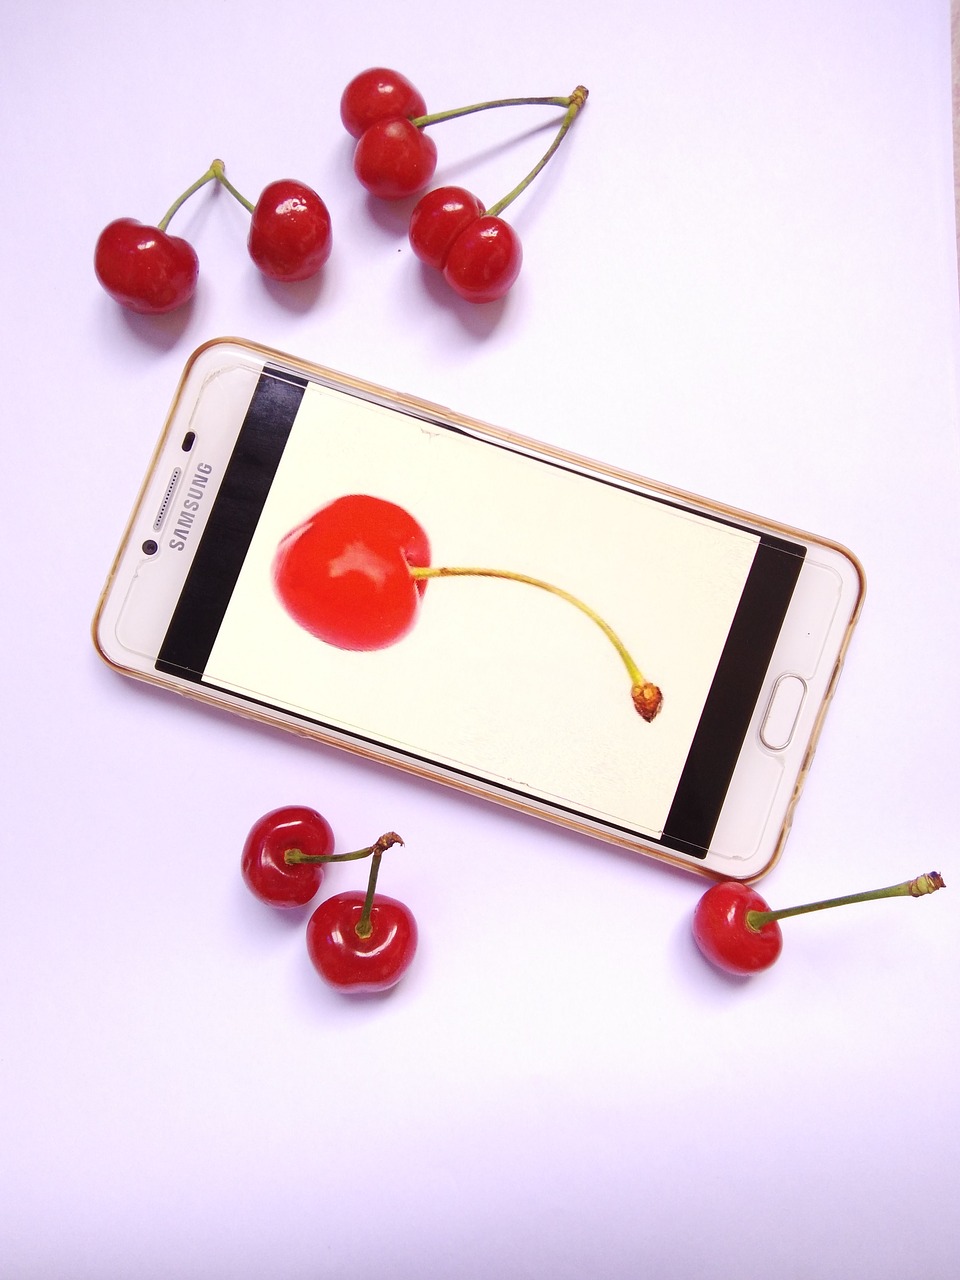 mobile cherry advertisement free photo